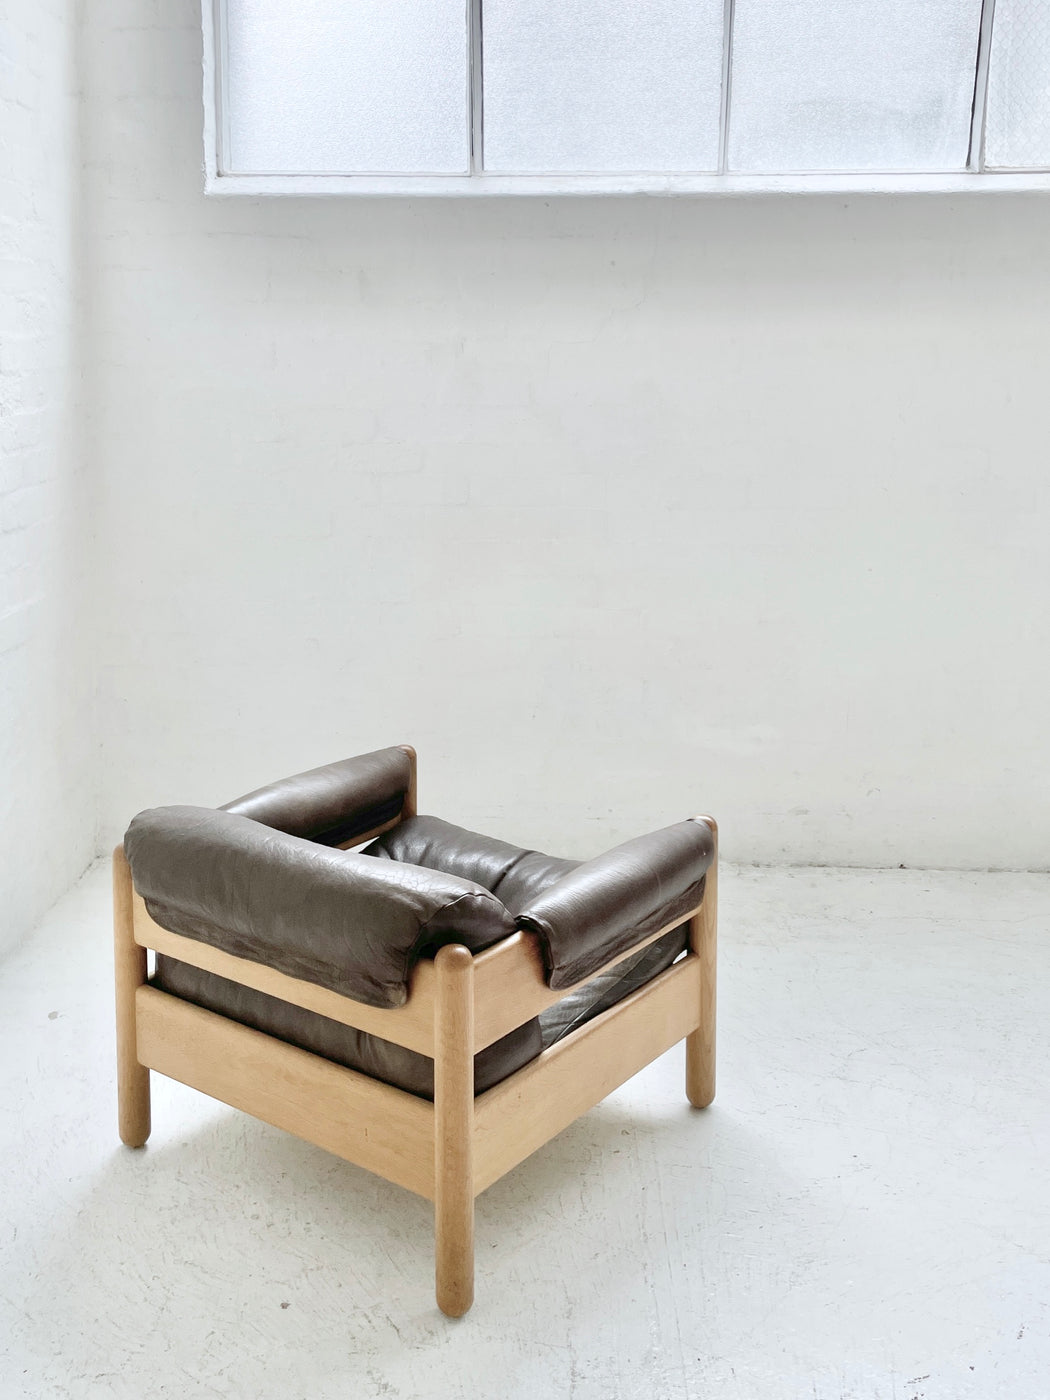 Illum Wikkelsø '380 Series' Chair